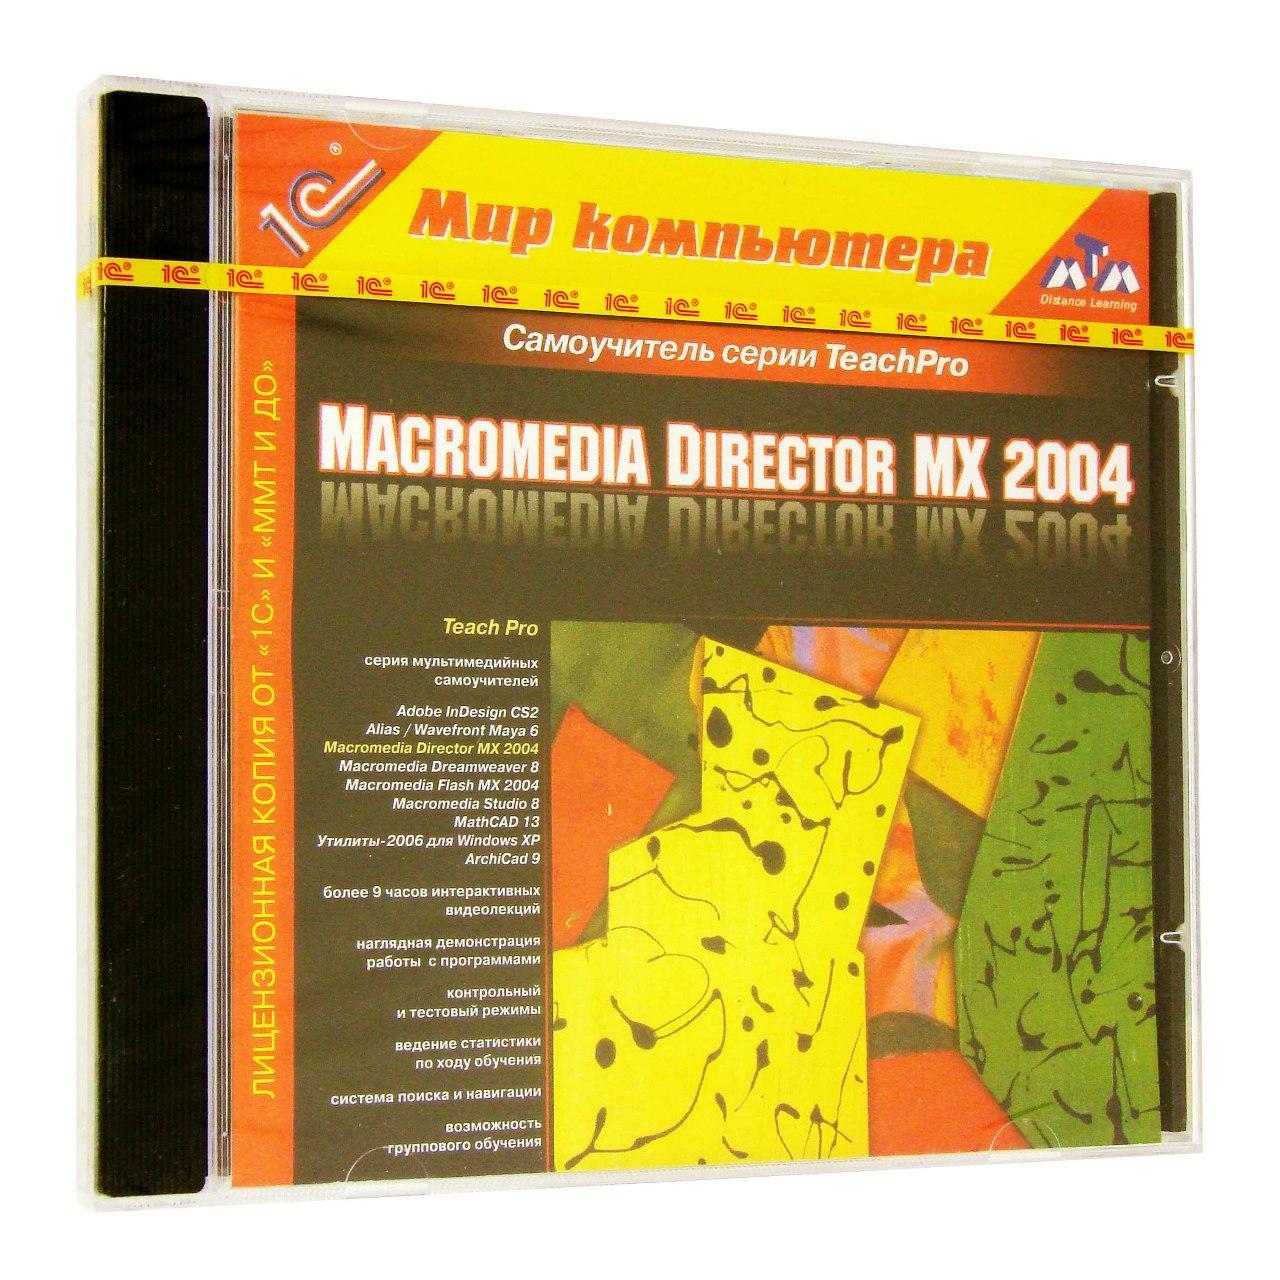 Macromedia Director MX 2004 TeachPro (PC)